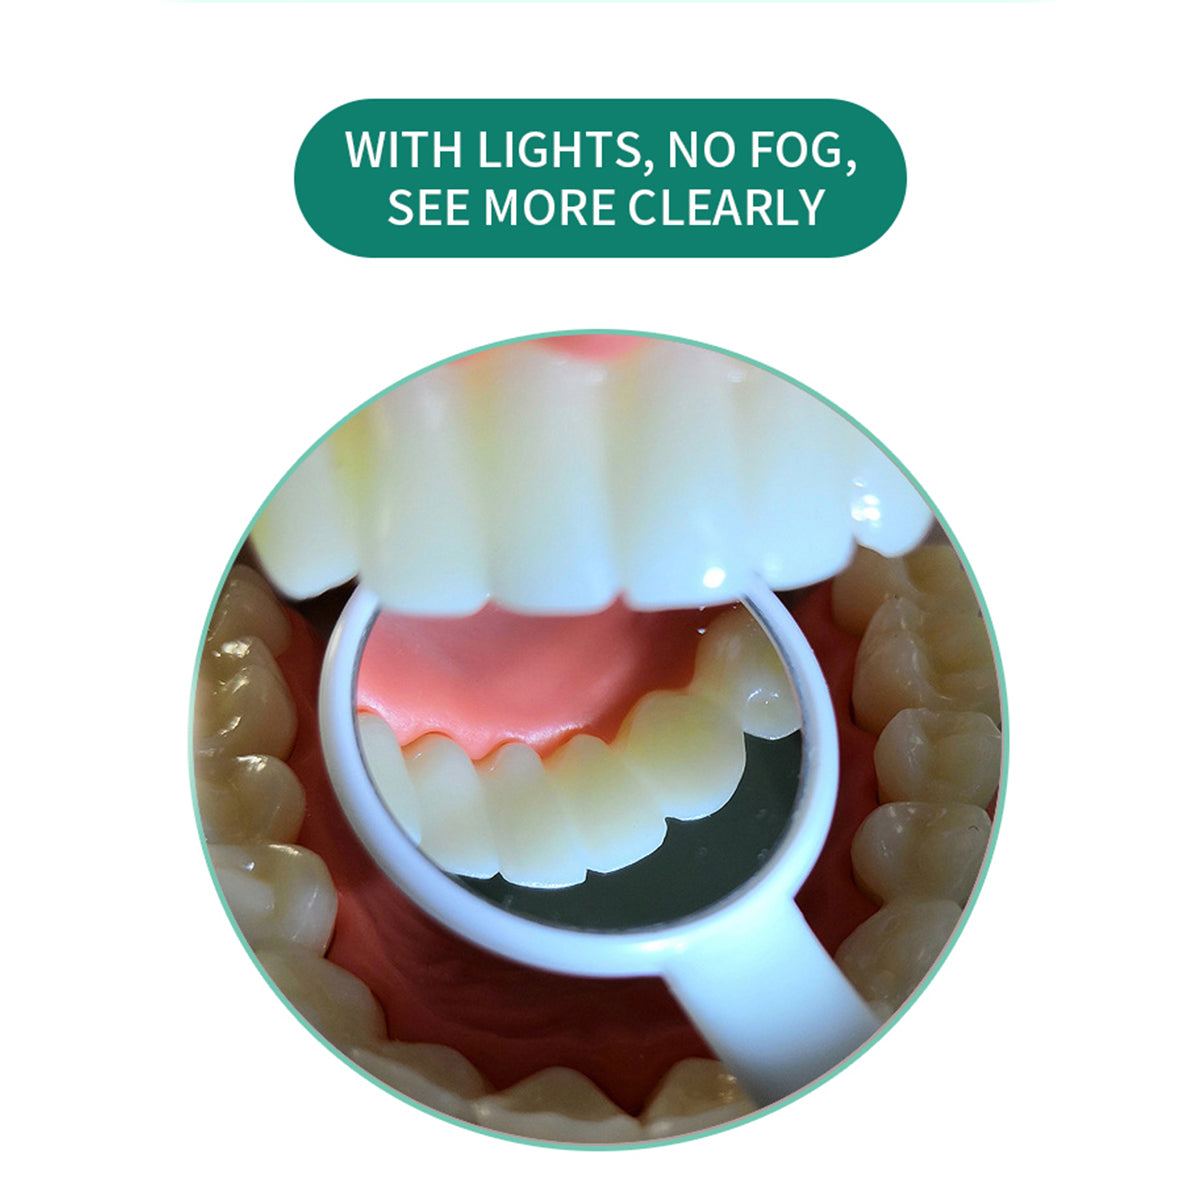 1 Pcs Dental Mirror with Light Tool LED Lighted Teeth Inspection Mirror Anti Fog Curve Angle Dentist Oral Care Tool